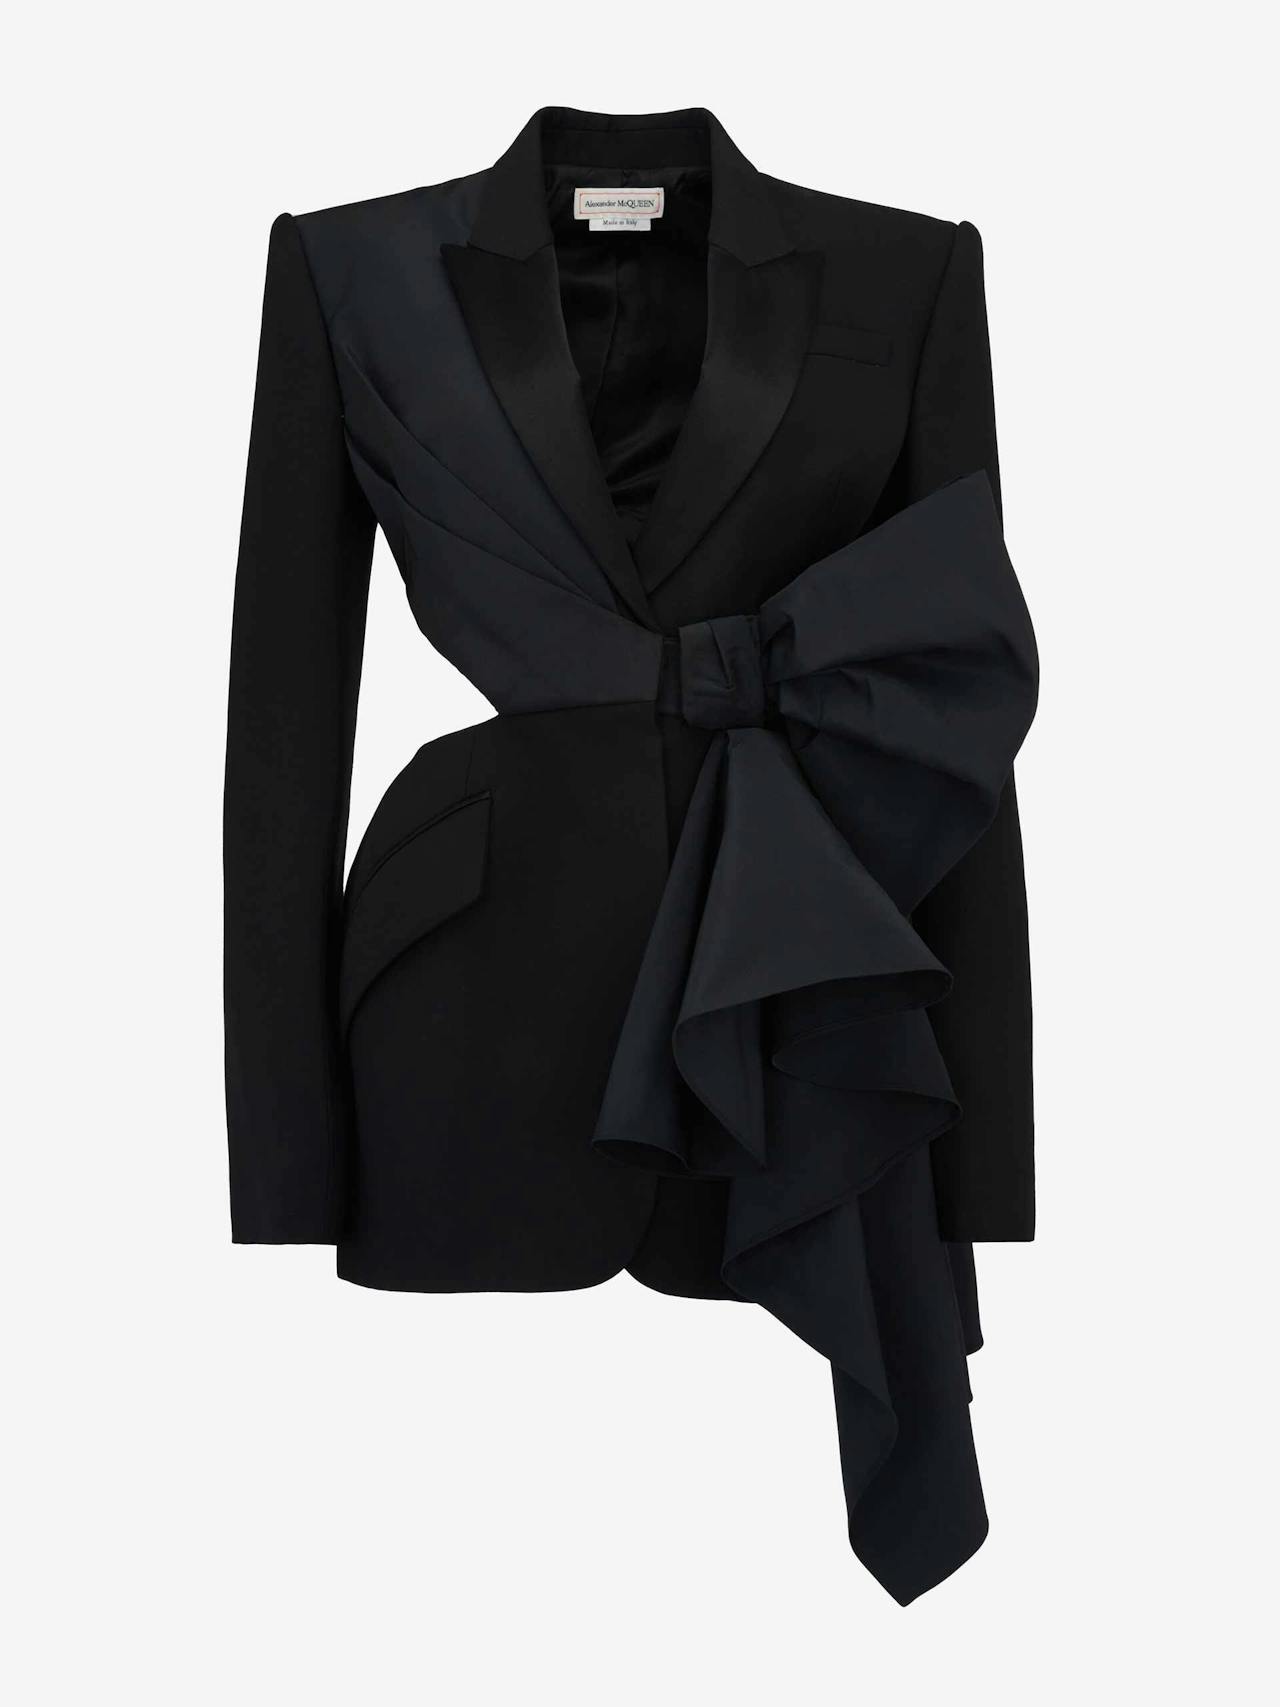 Women's bow slashed jacket in black